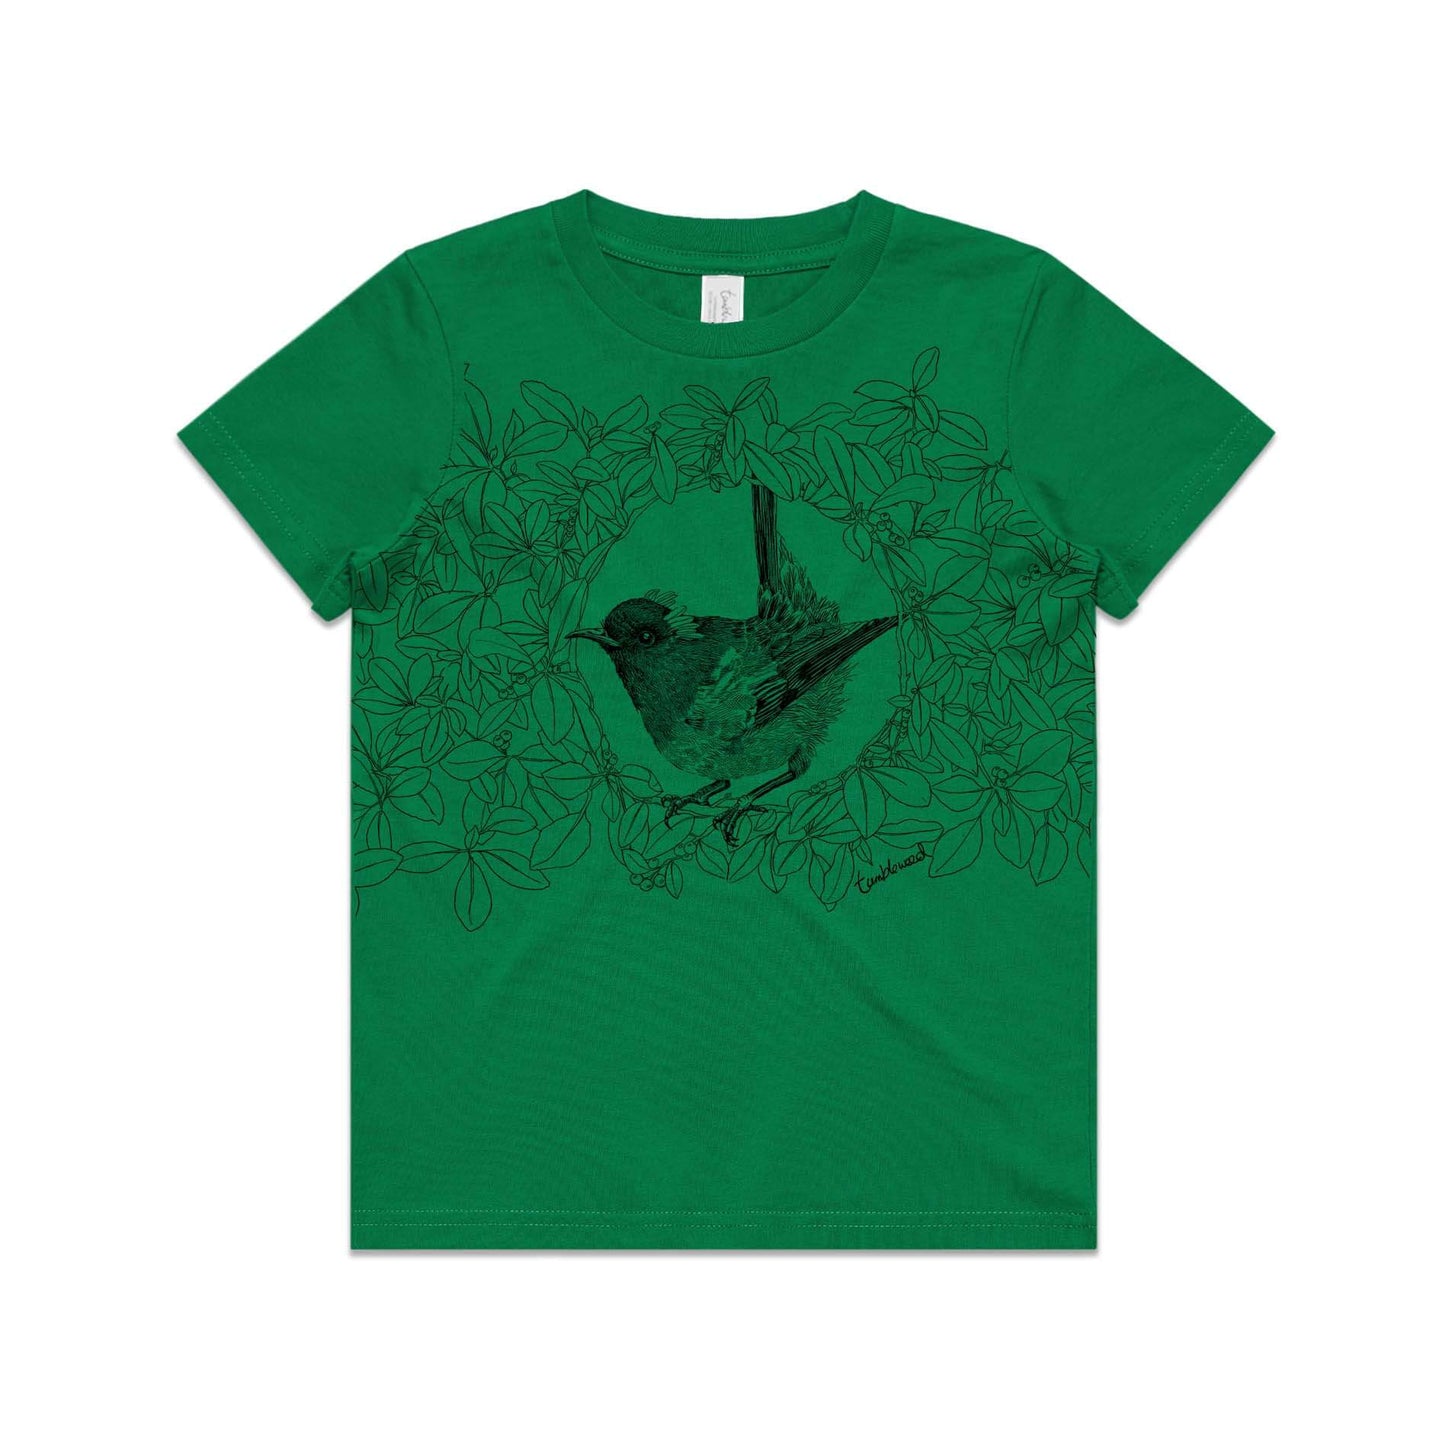 Green, cotton kids' t-shirt with screen printed Kids hihi/stitchbird design.